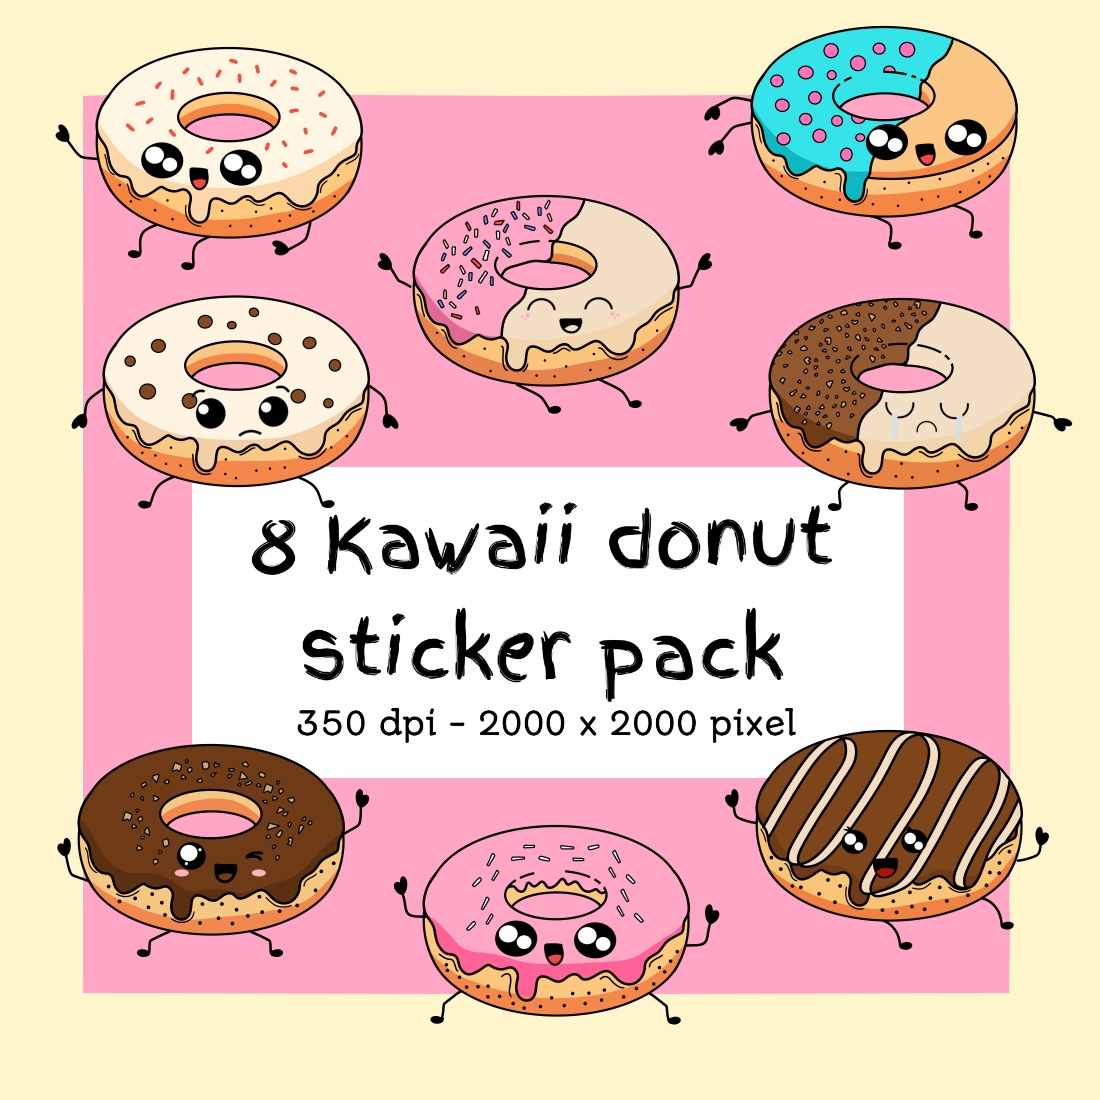 Cute Hand-drawn Kawaii Donut Pack cover image.